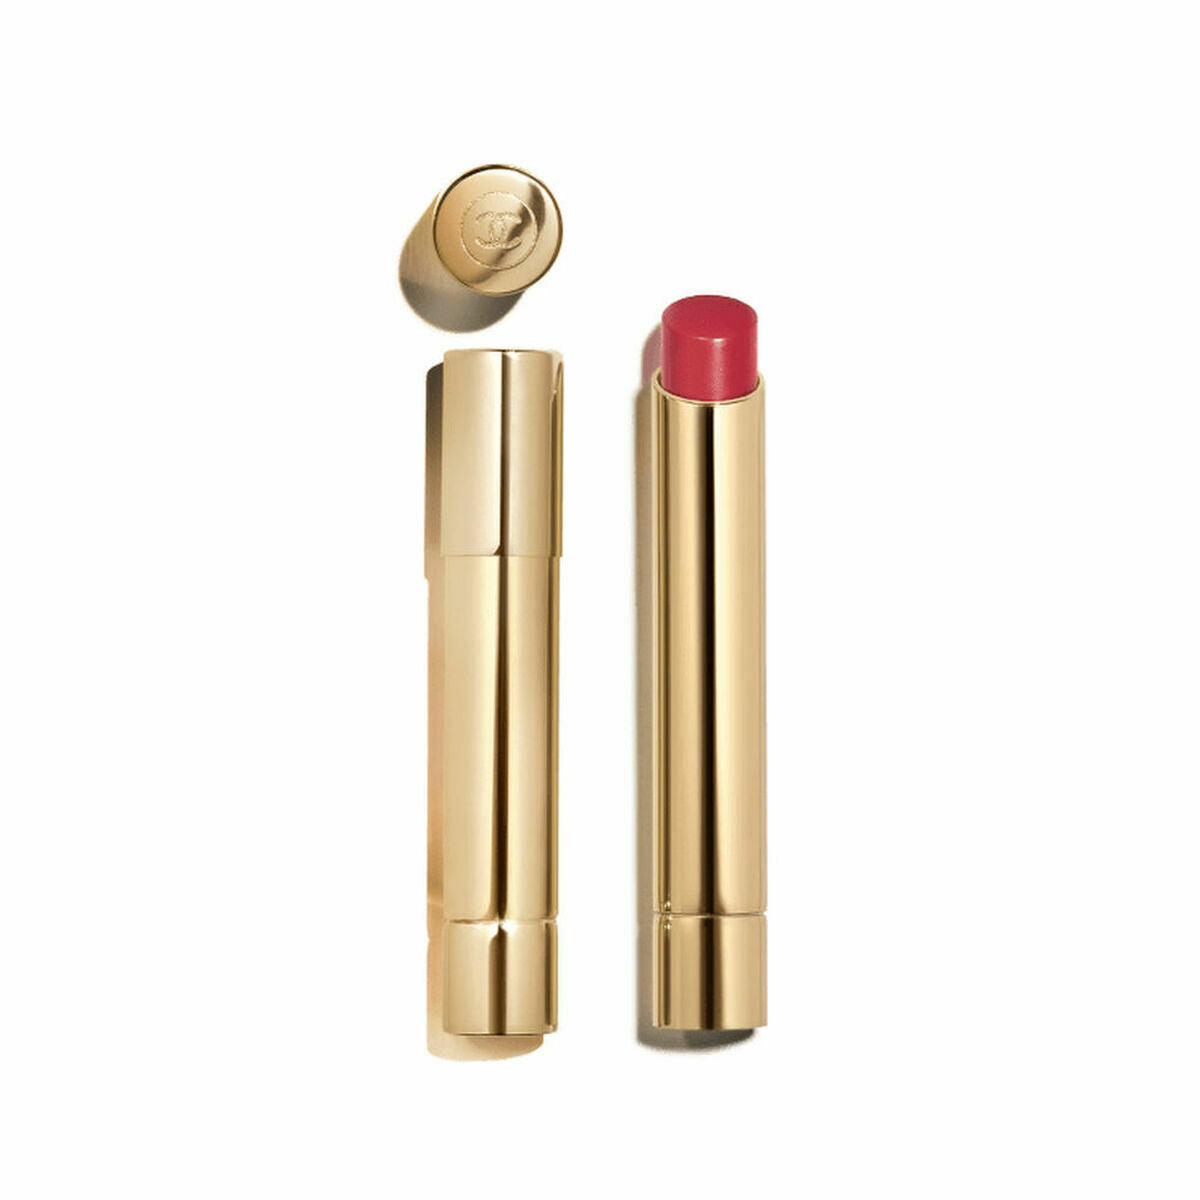 Kaufe Lippenstift Chanel Rouge Allure L'extrait - Ricarica Rose Turbulent 834 bei AWK Flagship um € 51.00